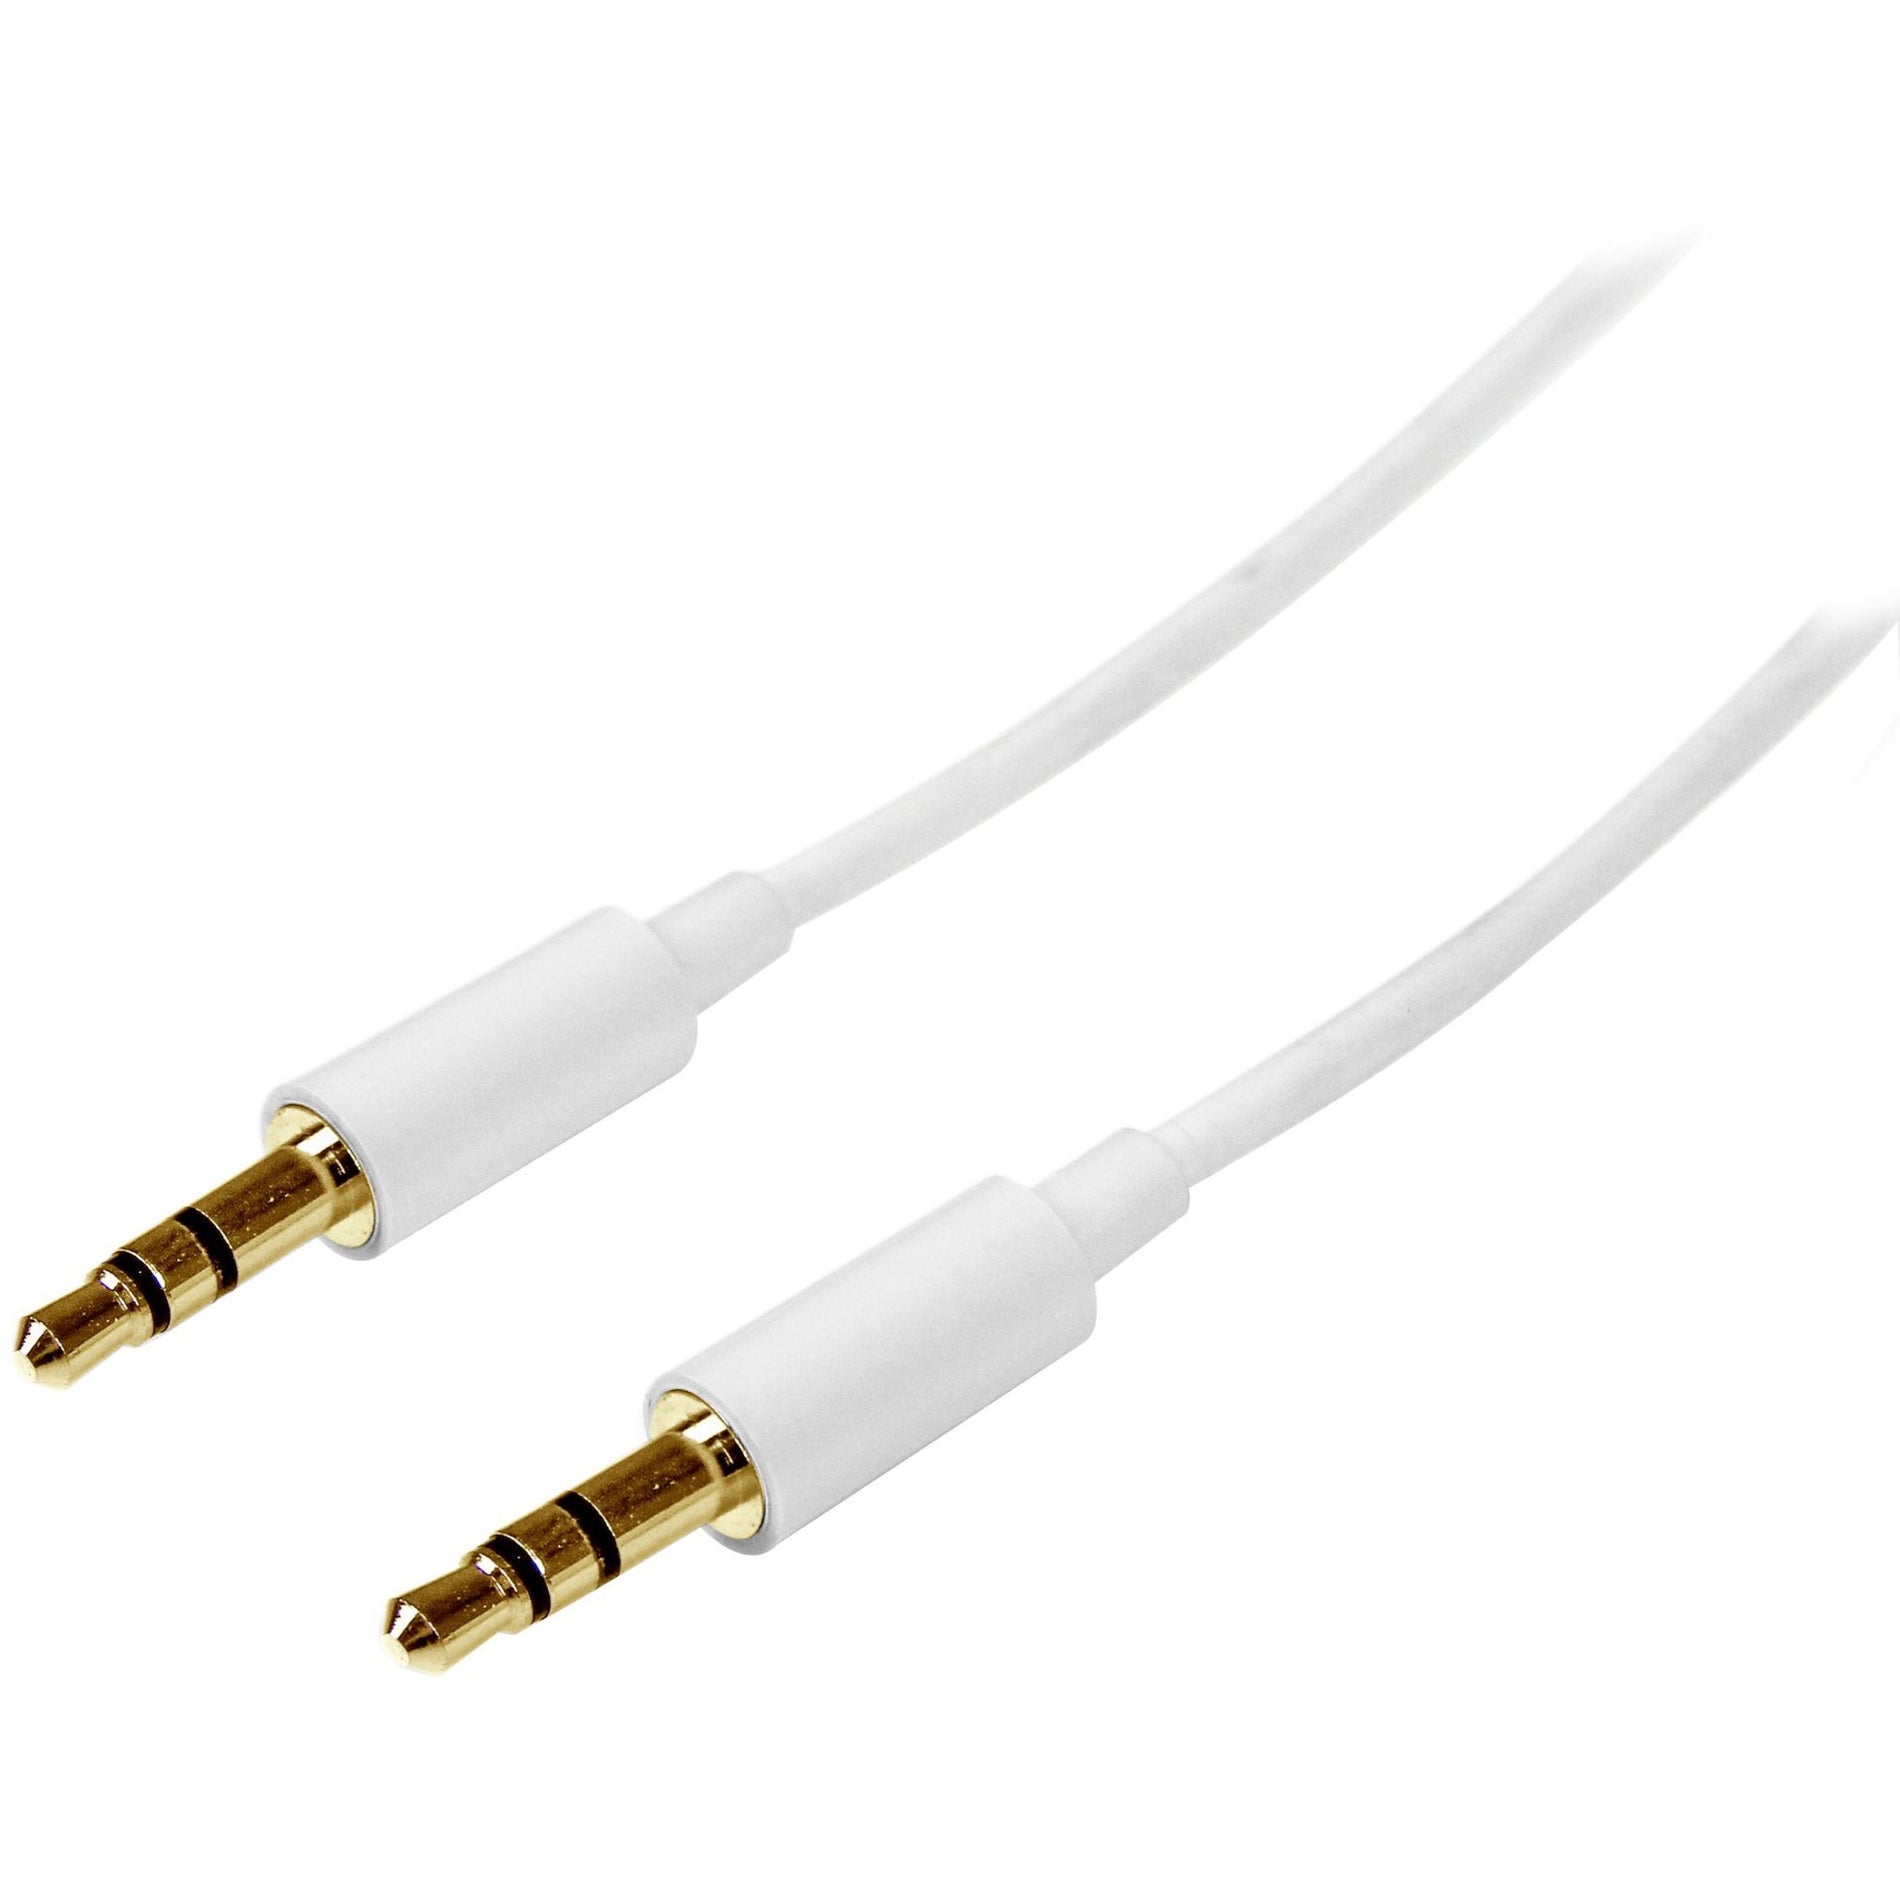 StarTech.com MU3MMMSWH 3m White Slim 3.5mm Stereo Audio Cable - Male to Male Molded Copper Conductor 9.84 ft Length スタートゥック・ドットコム MU3MMMSWH 3m ホワイト スリム 3.5ミリメートル ステレオ オーディオ ケーブル - メス トゥ メス モールデッド 銅導体 9.84 フィート 長さ